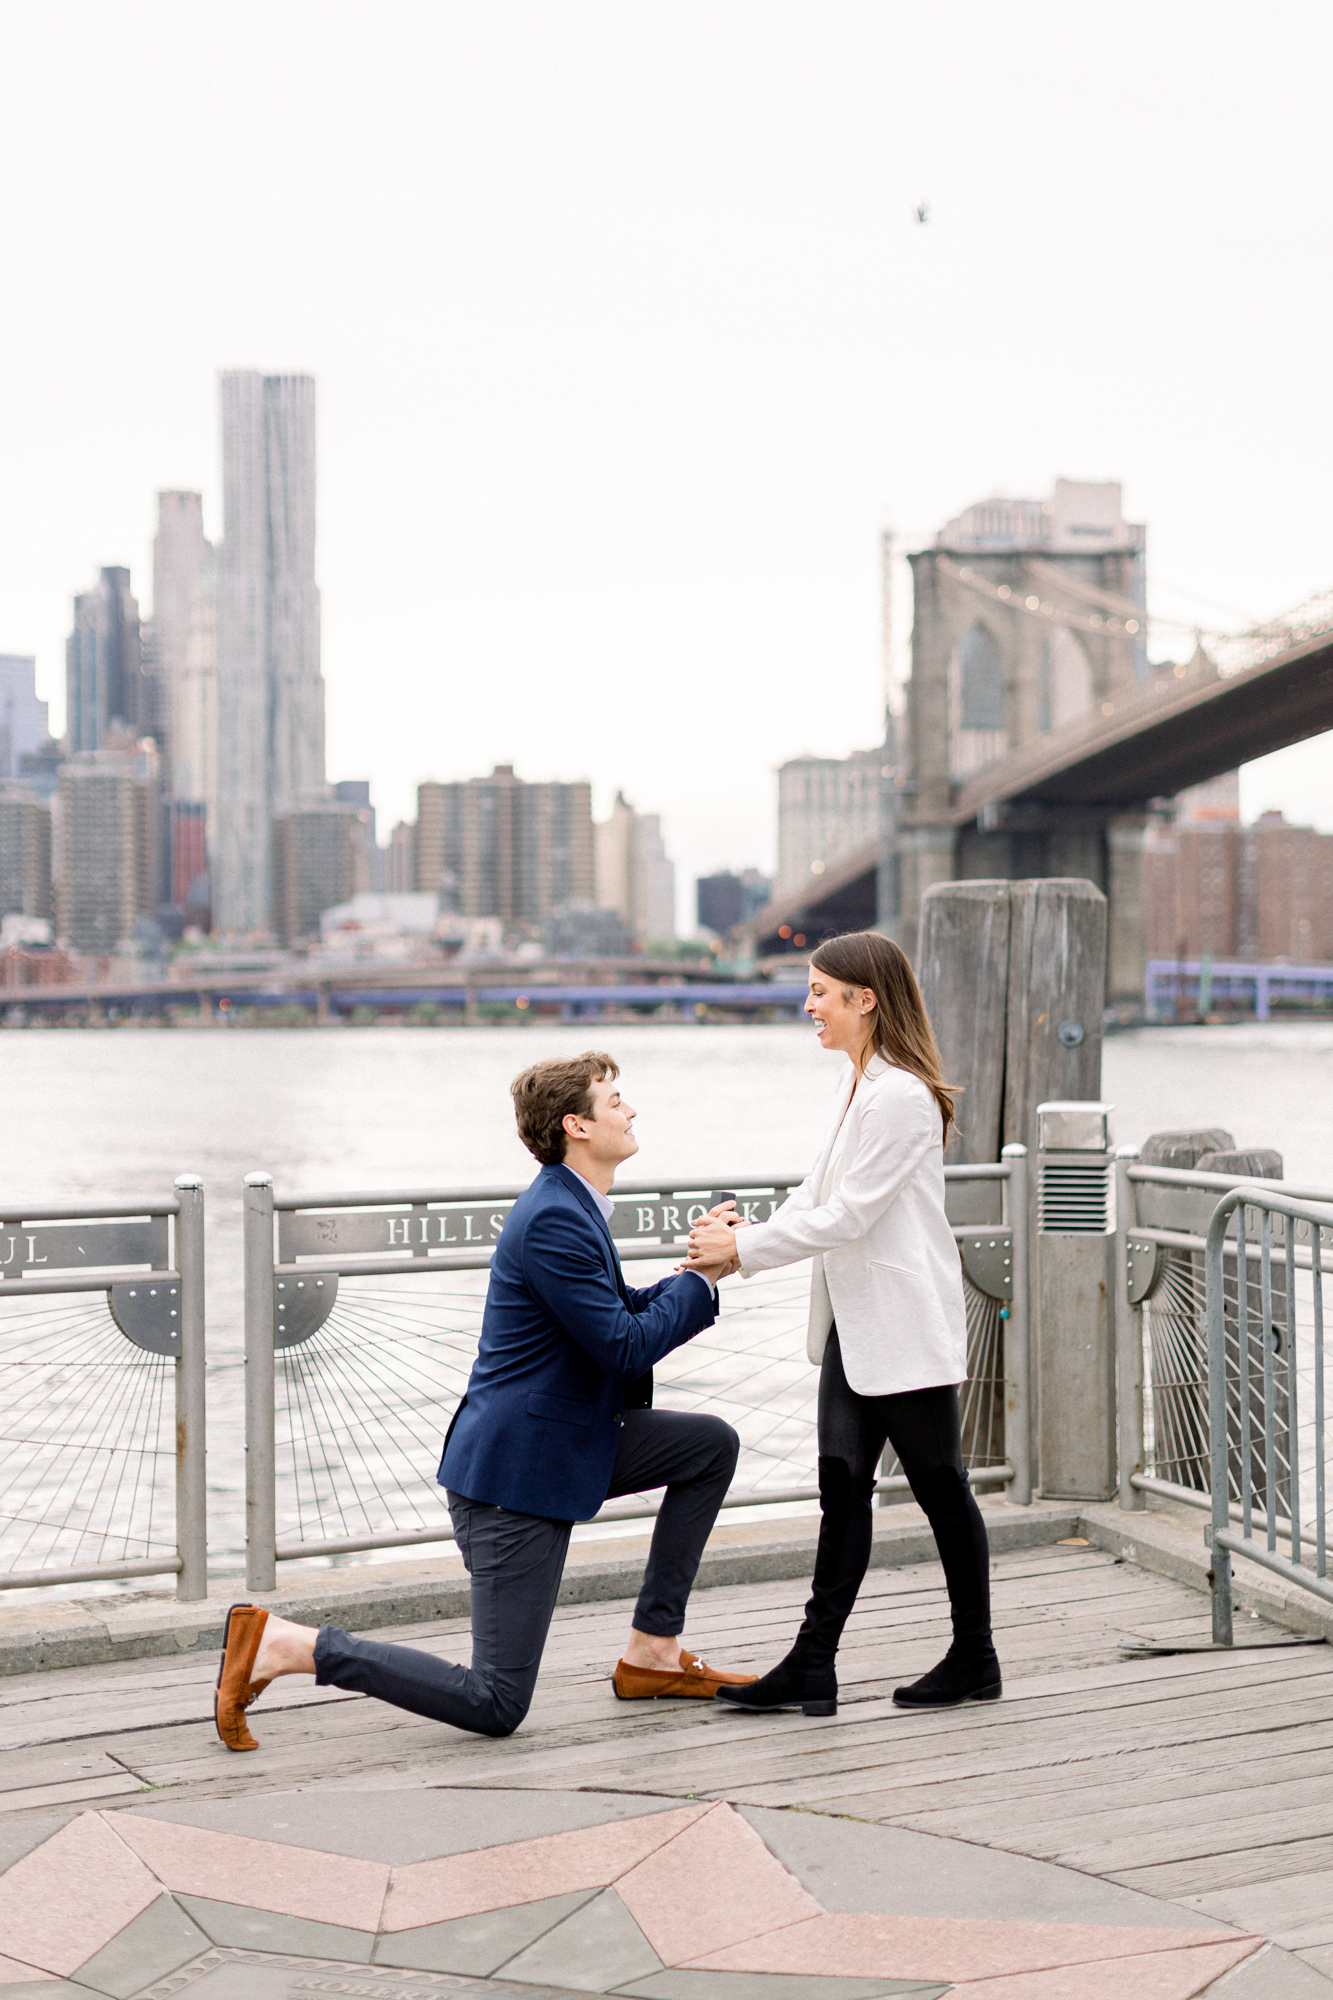 Memorable DUMBO Proposal Photos Featuring the Brooklyn Bridge